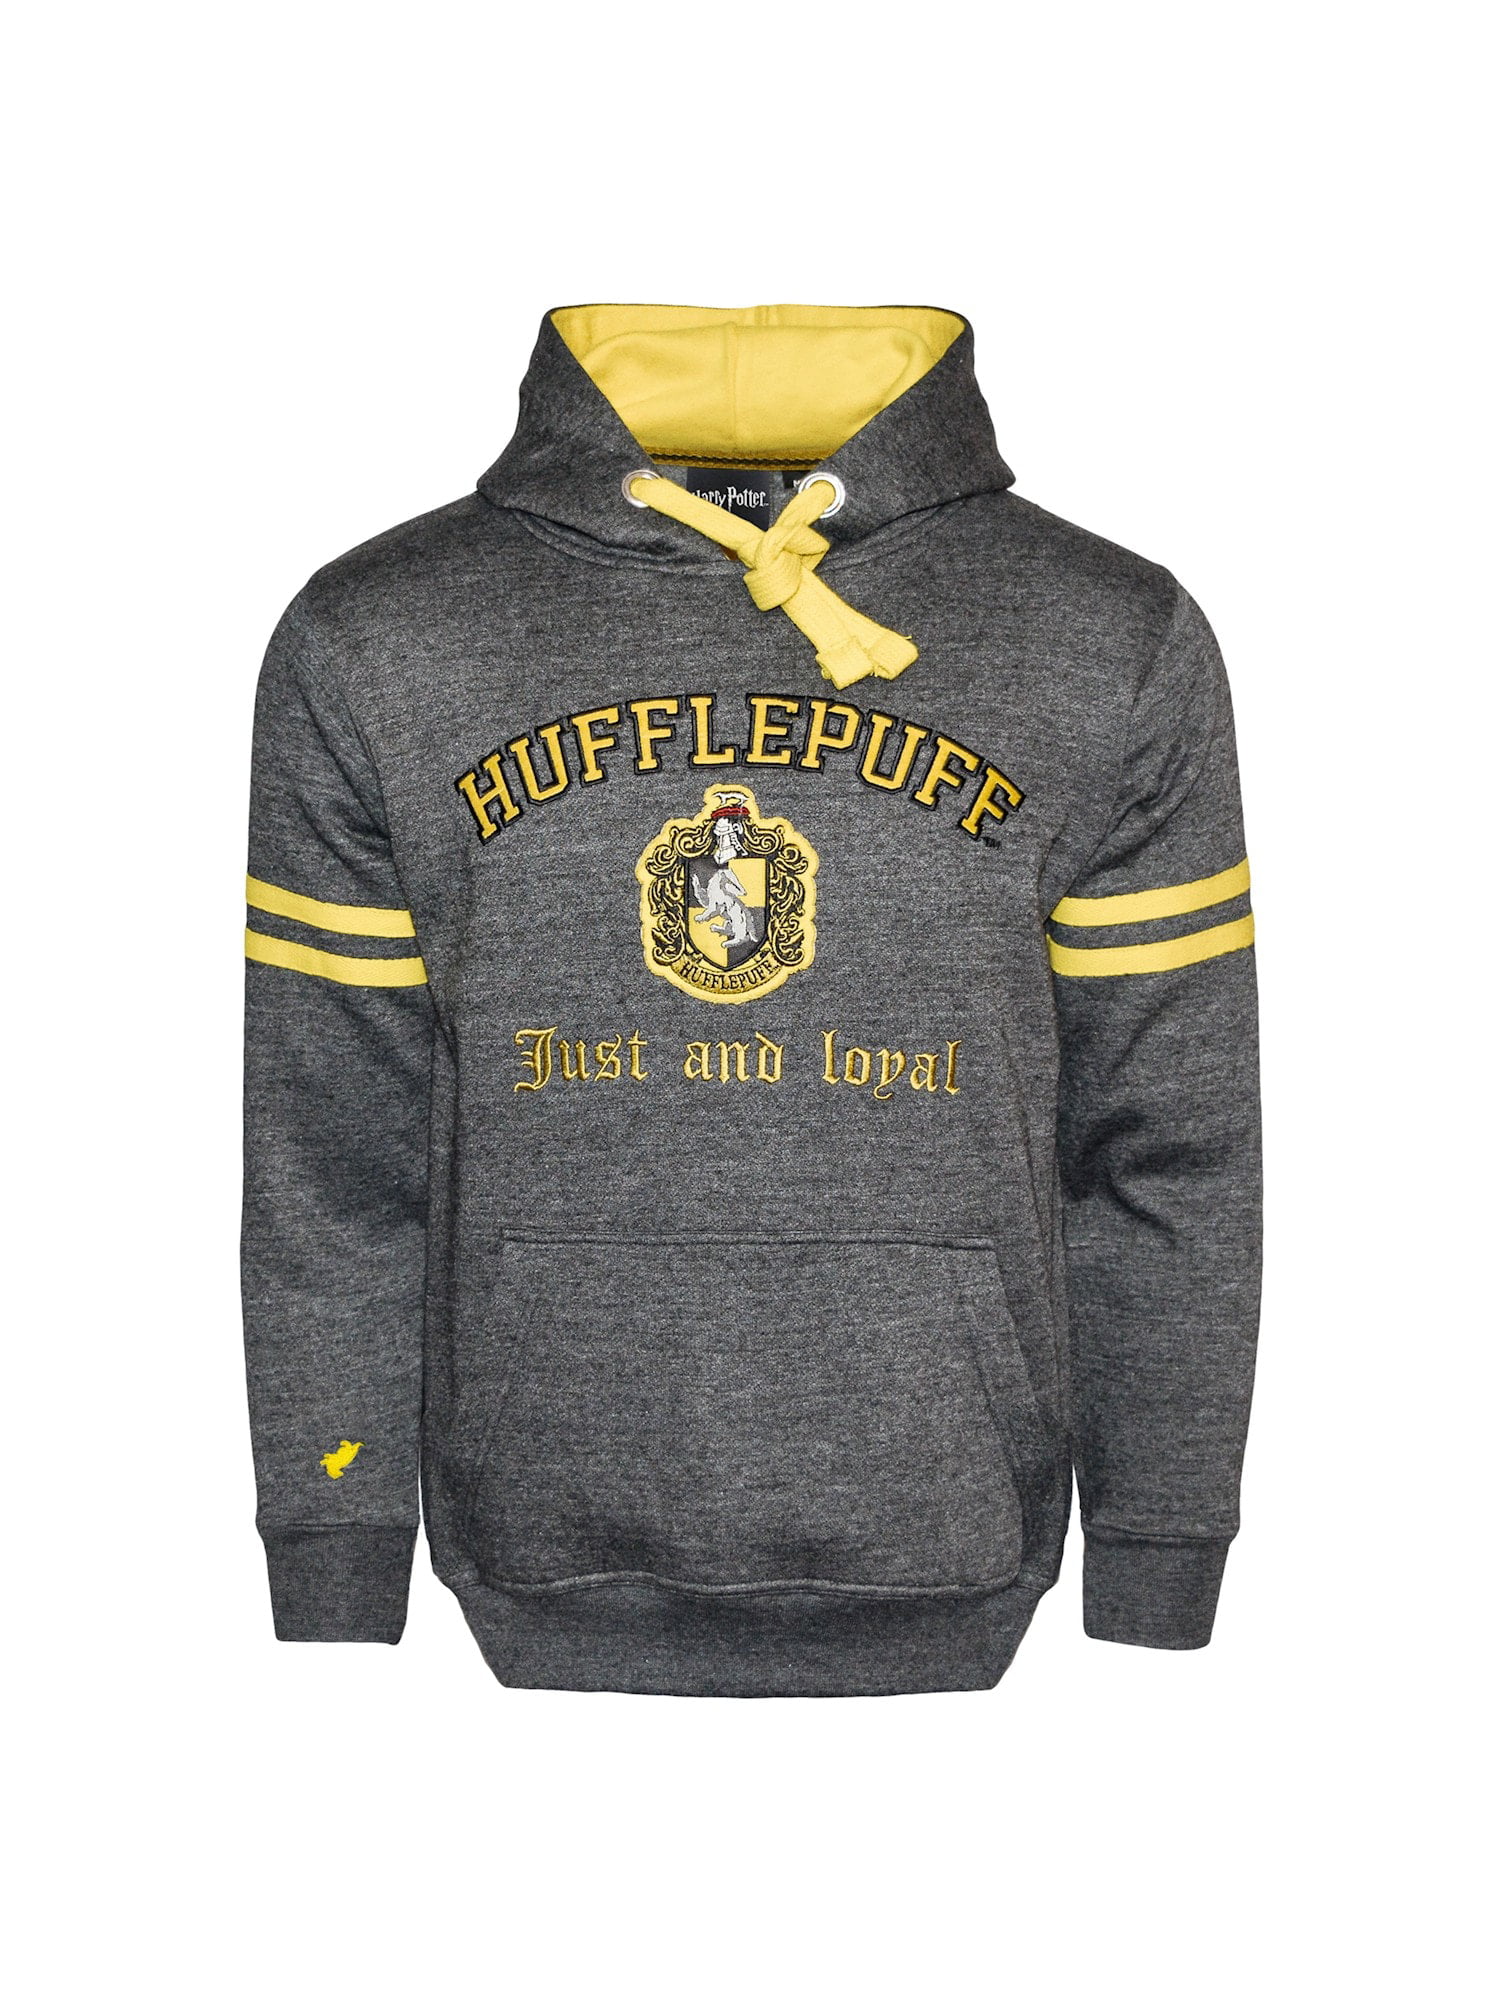 Harry potter Hogwarts school fleece Sweater embroidery warm Uniform Hoodies DE 